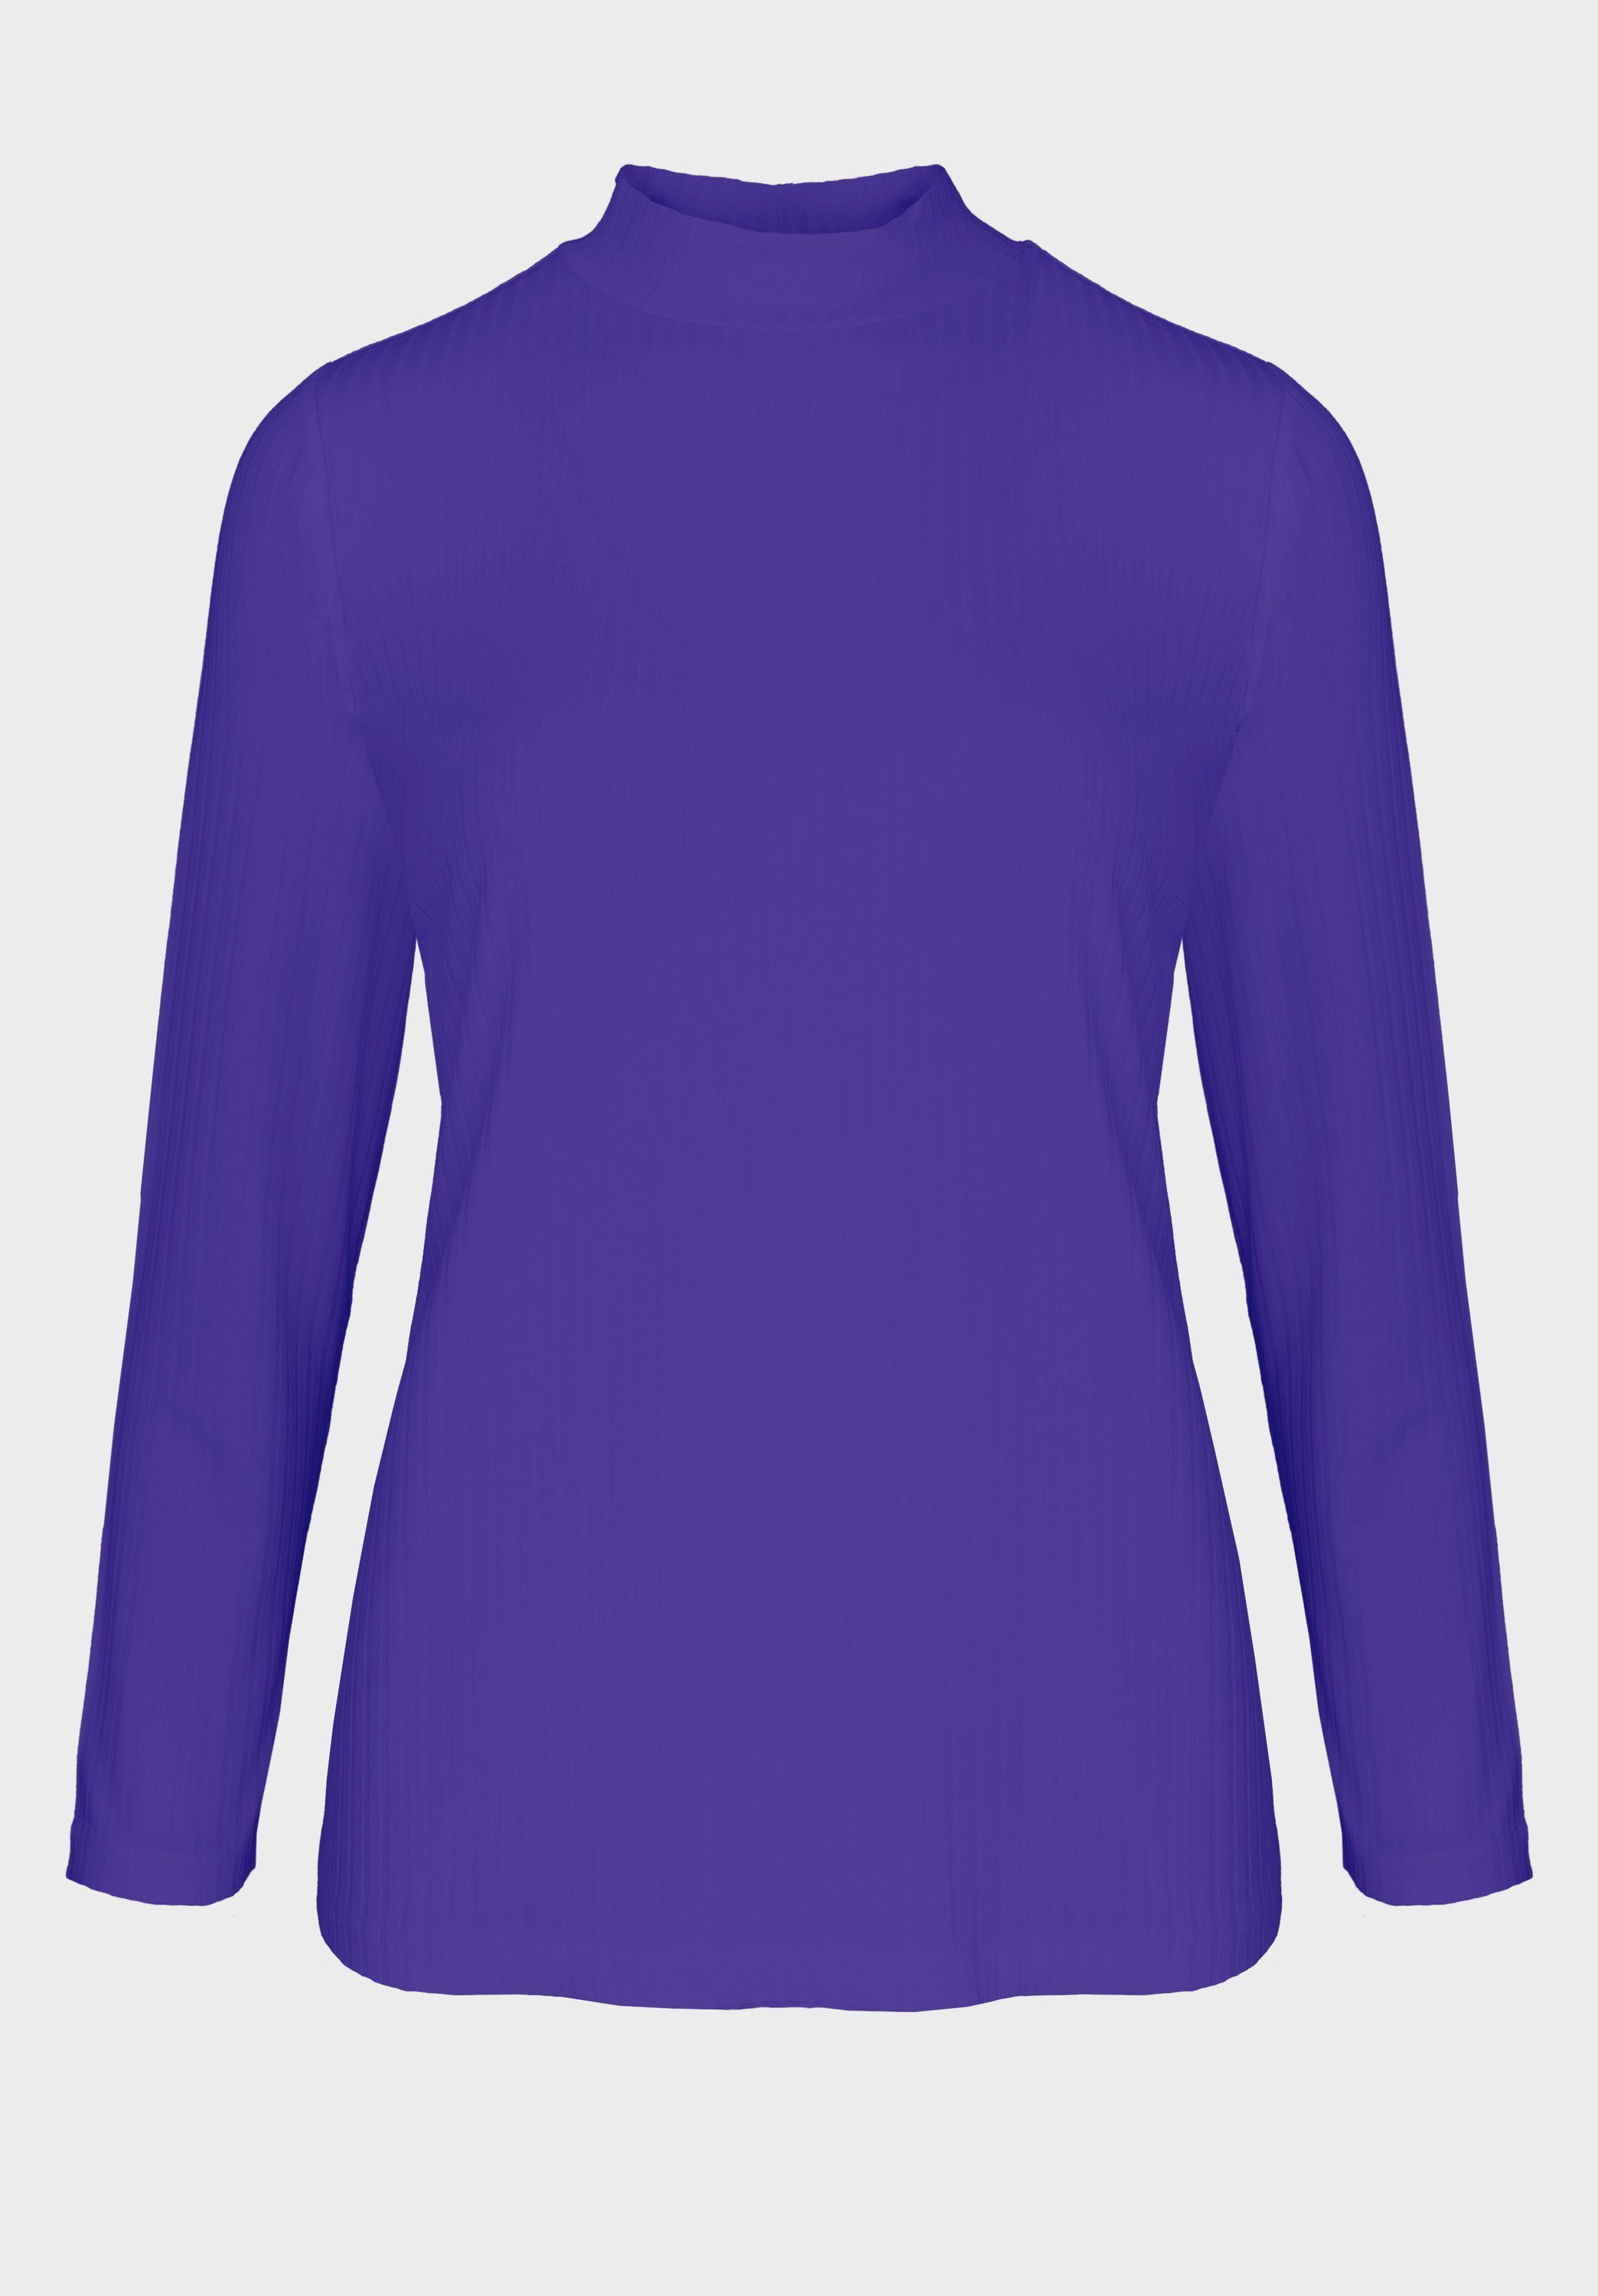 bianca Langarmshirt GRETA mit modernem purple coolen Trendfarben Turtle-Neck in